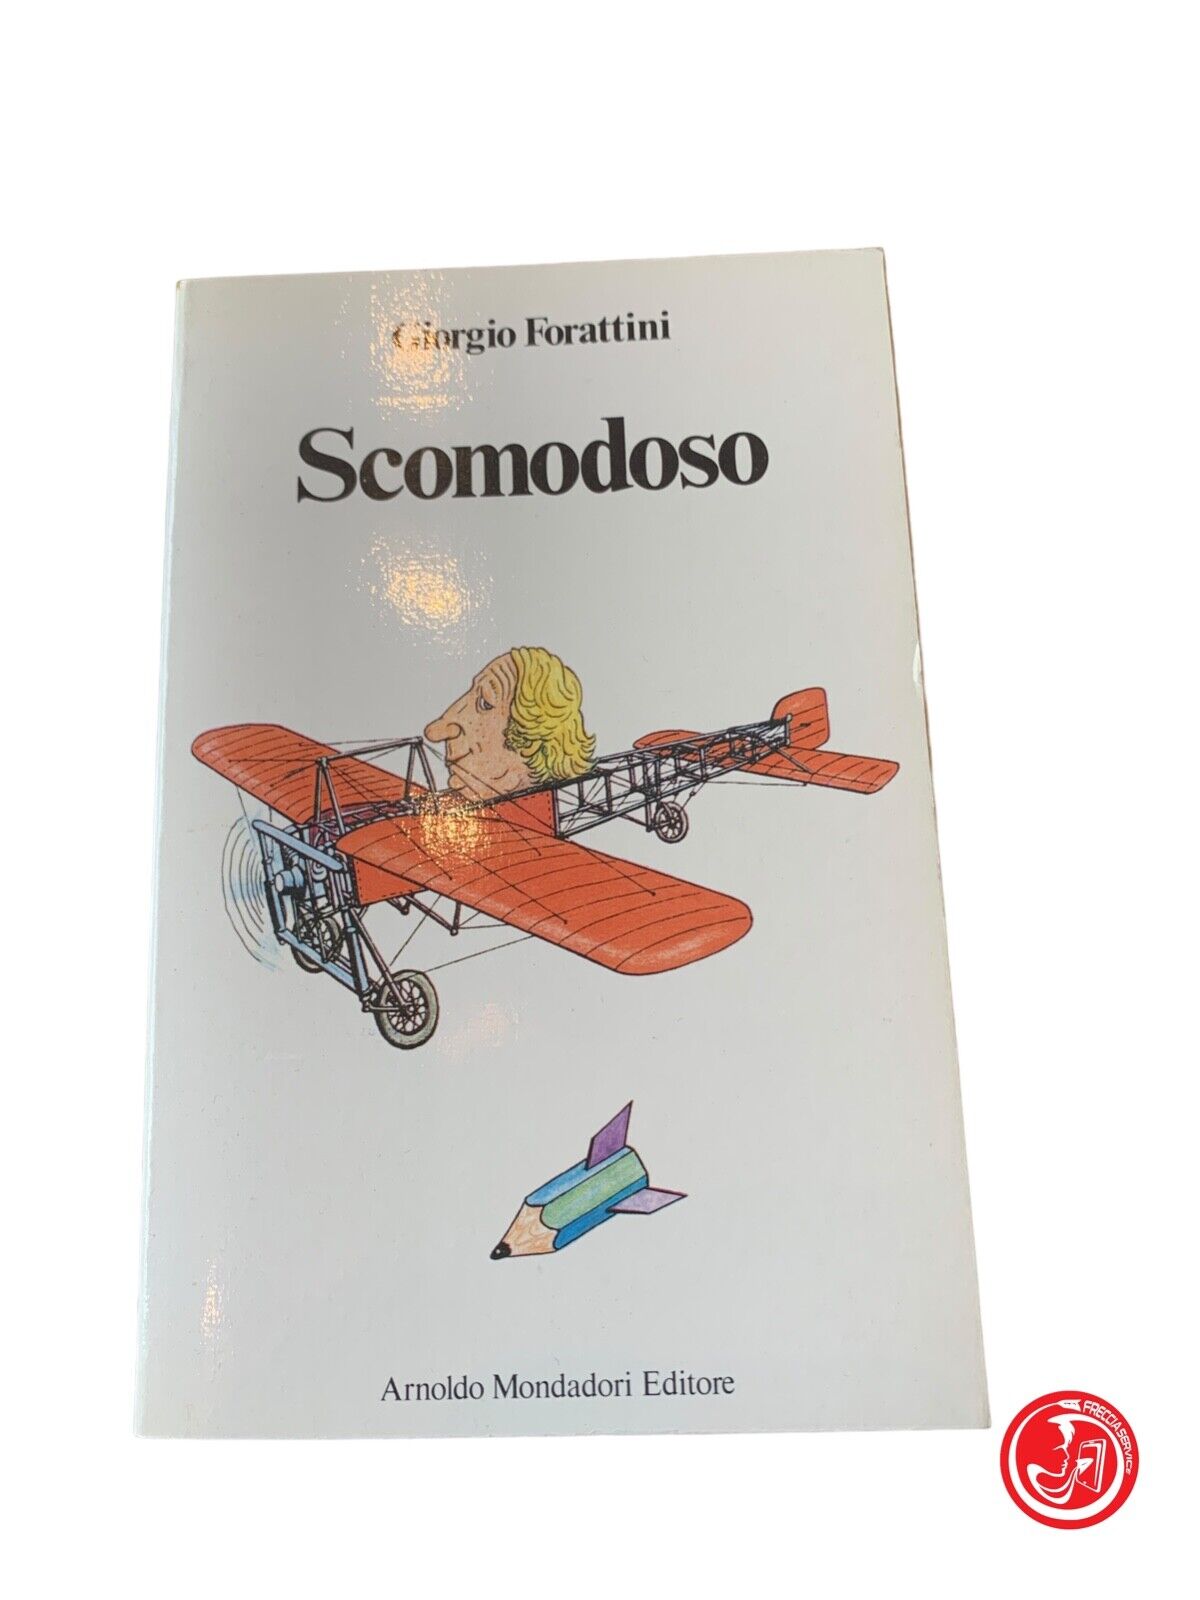 Scomodoso - Giorgio Forattini - Arnoldo Mondadori Editore